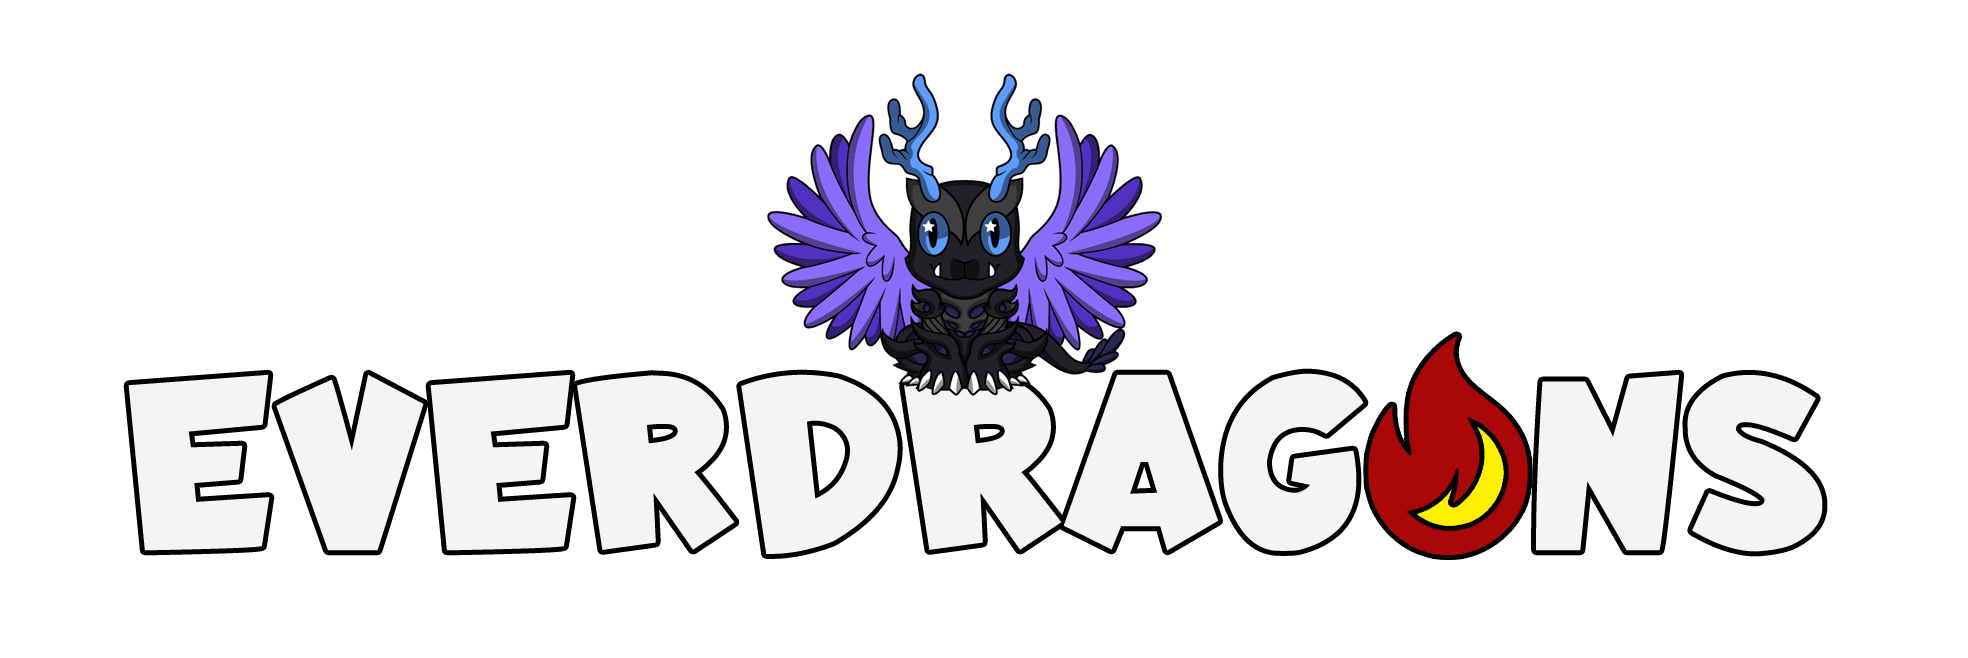 Everdragons Logo